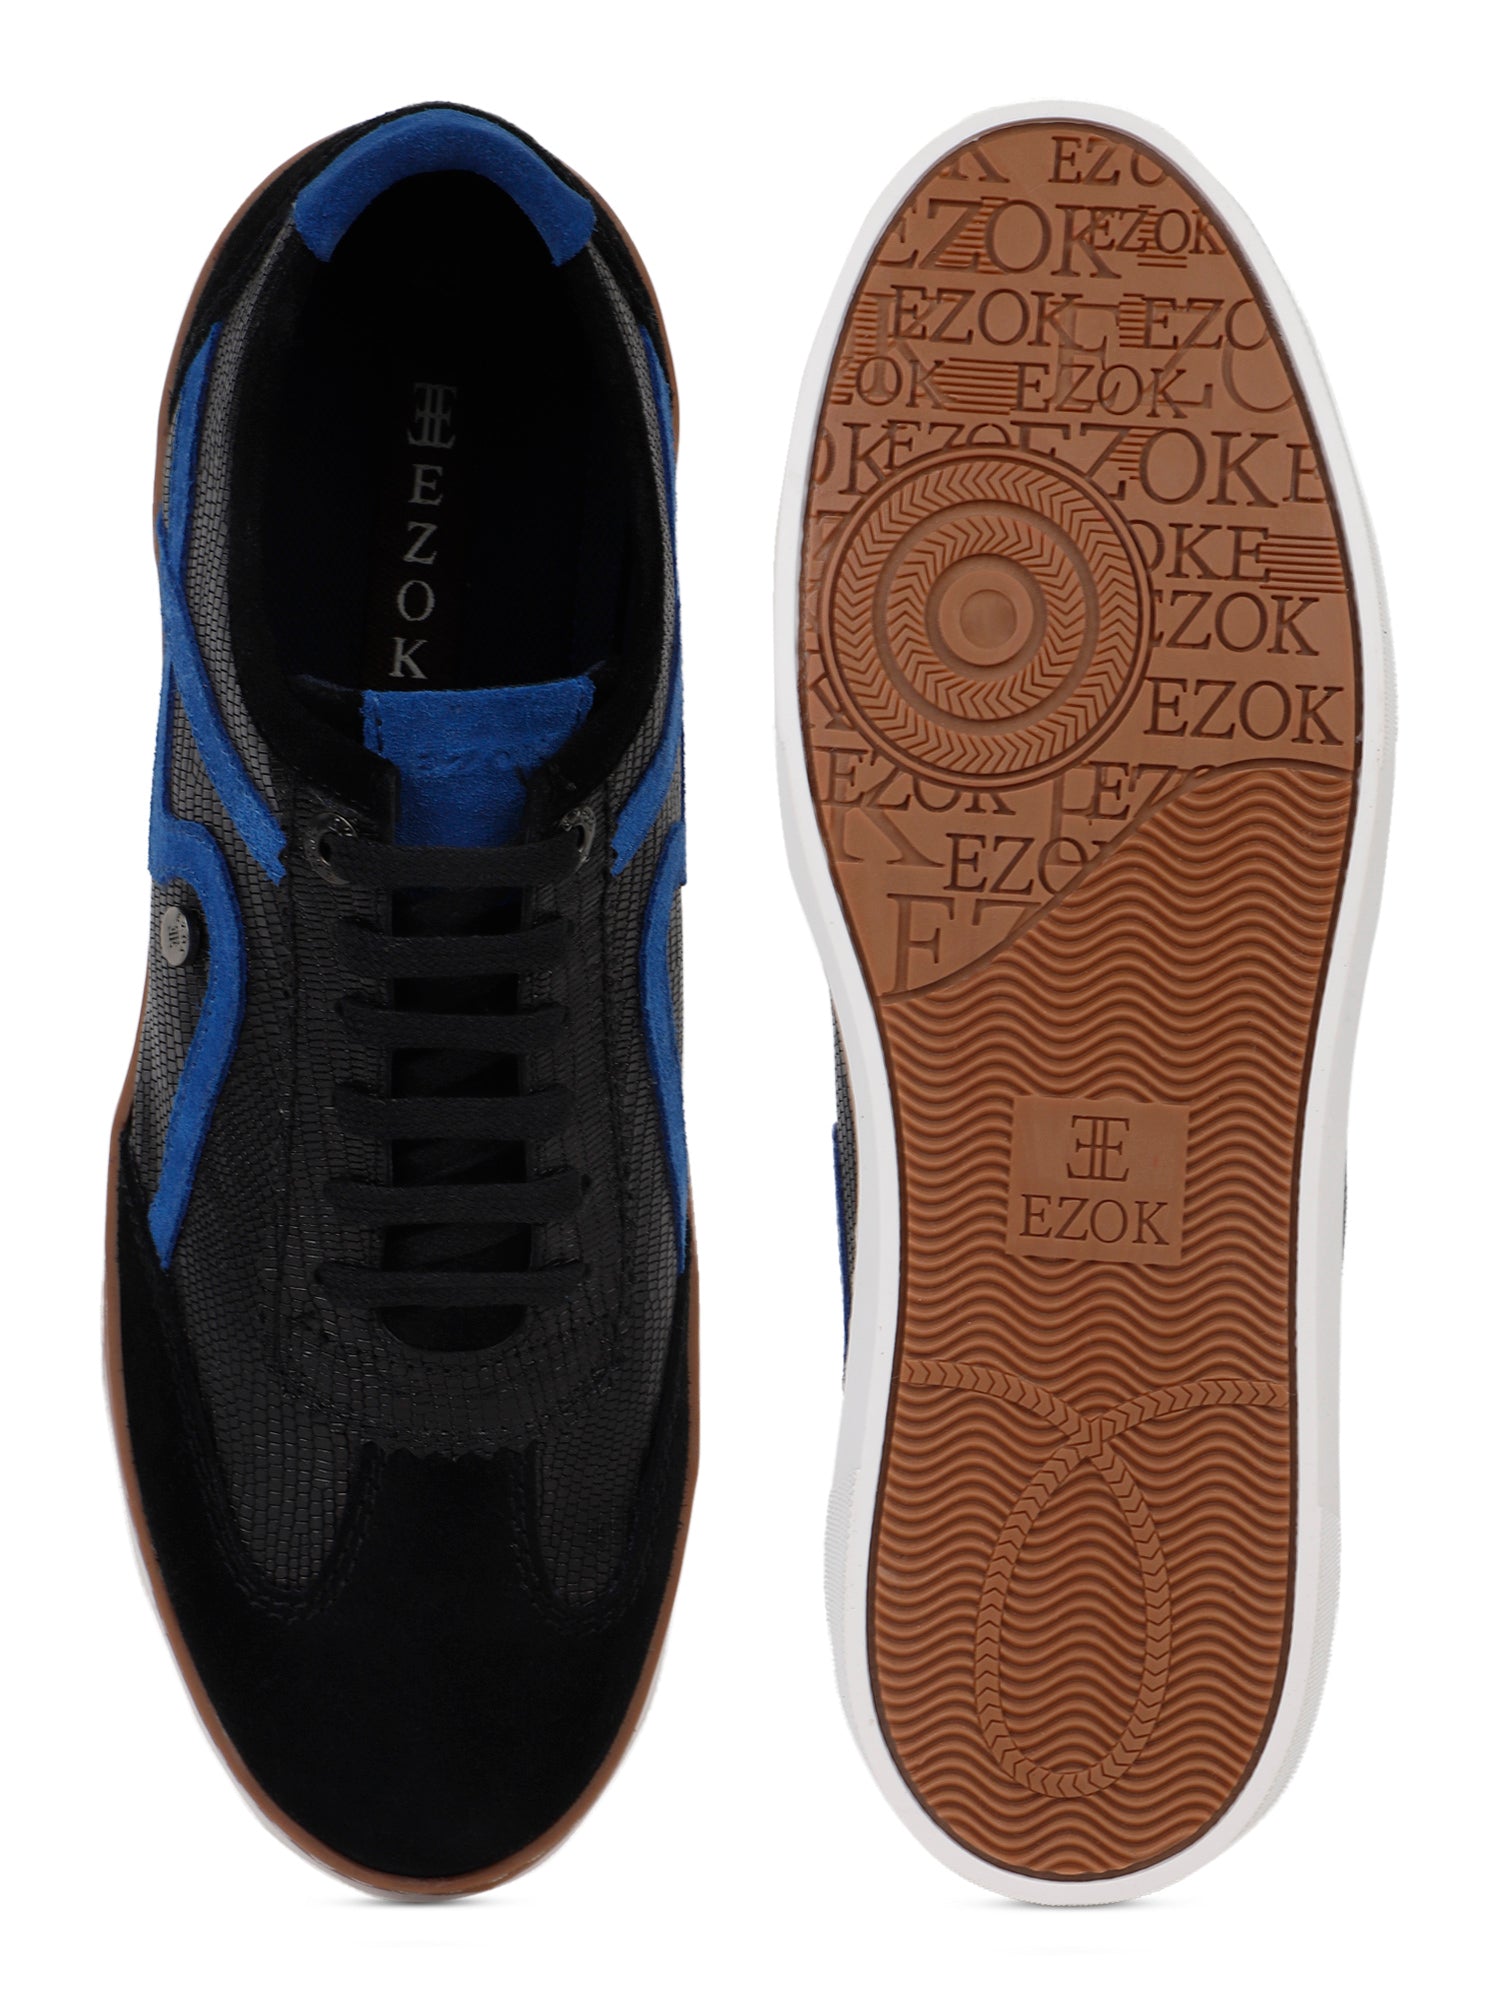 Ezok Men Black Sneaker Casual Shoes